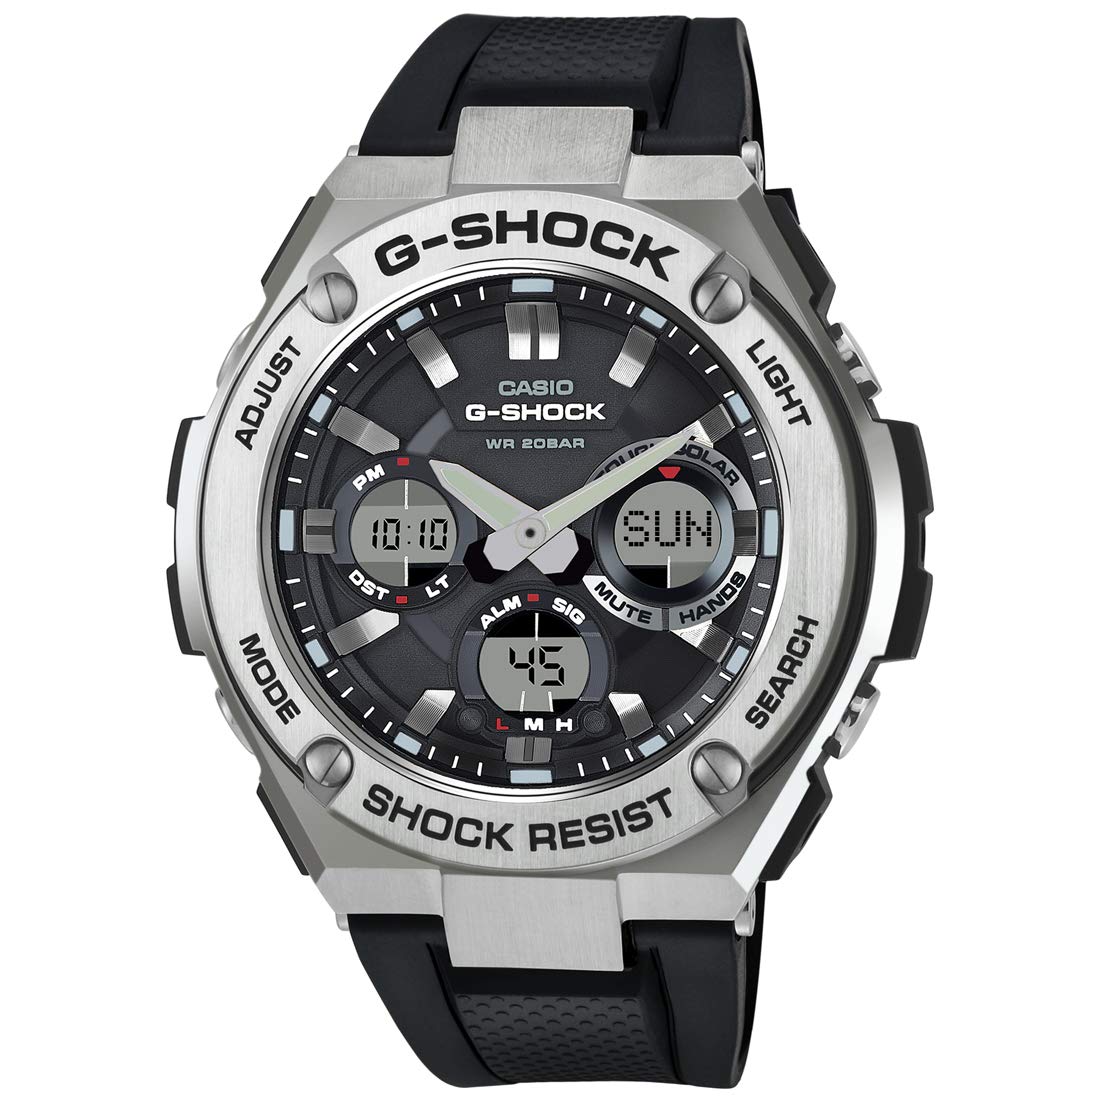 CASIO G-SHOCK GSTS110-1A